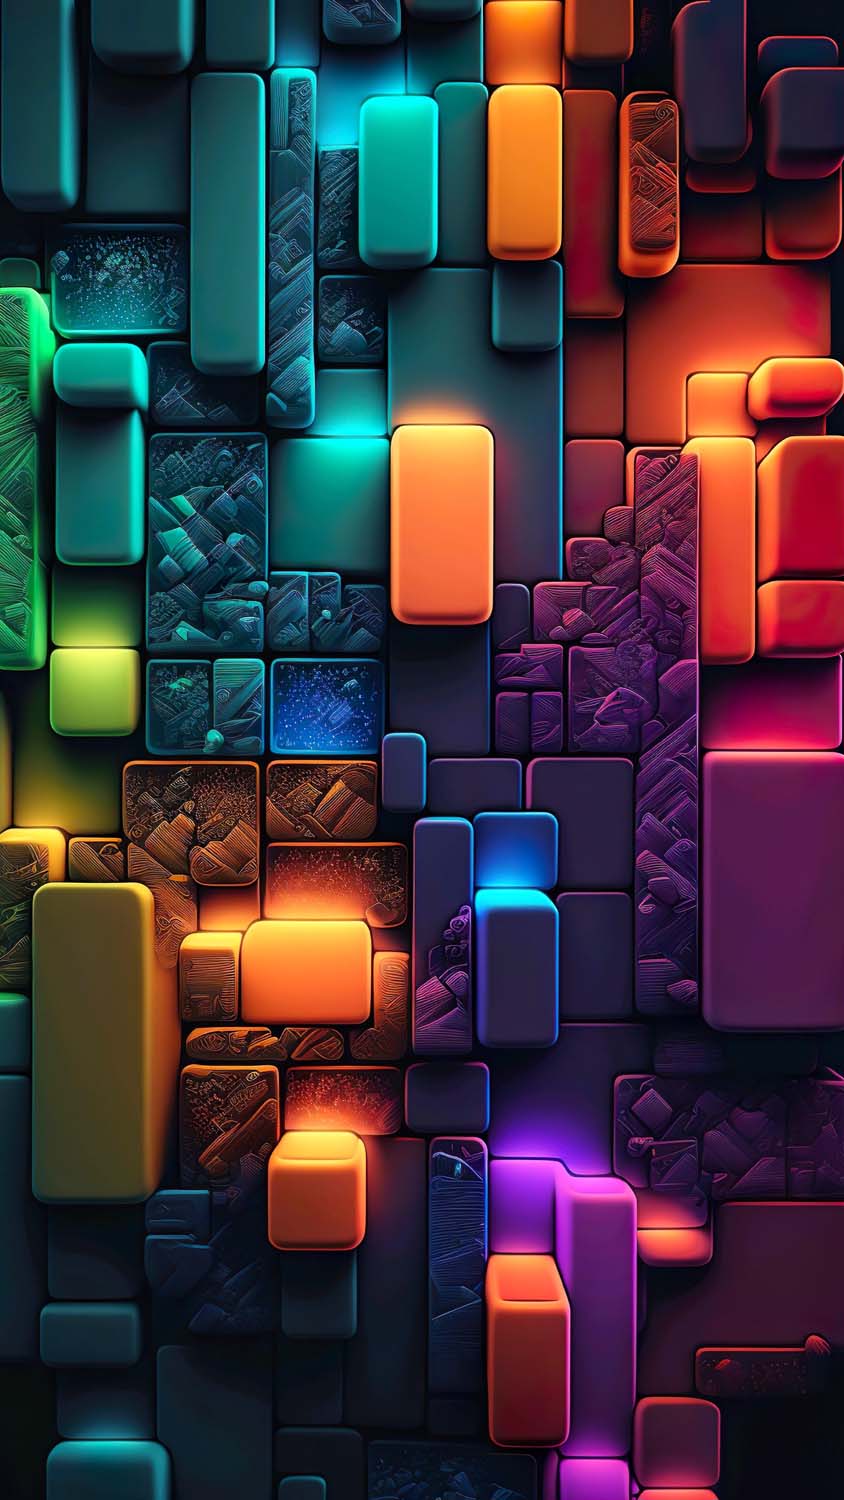 3D Bricks Wall iPhone Wallpaper HD